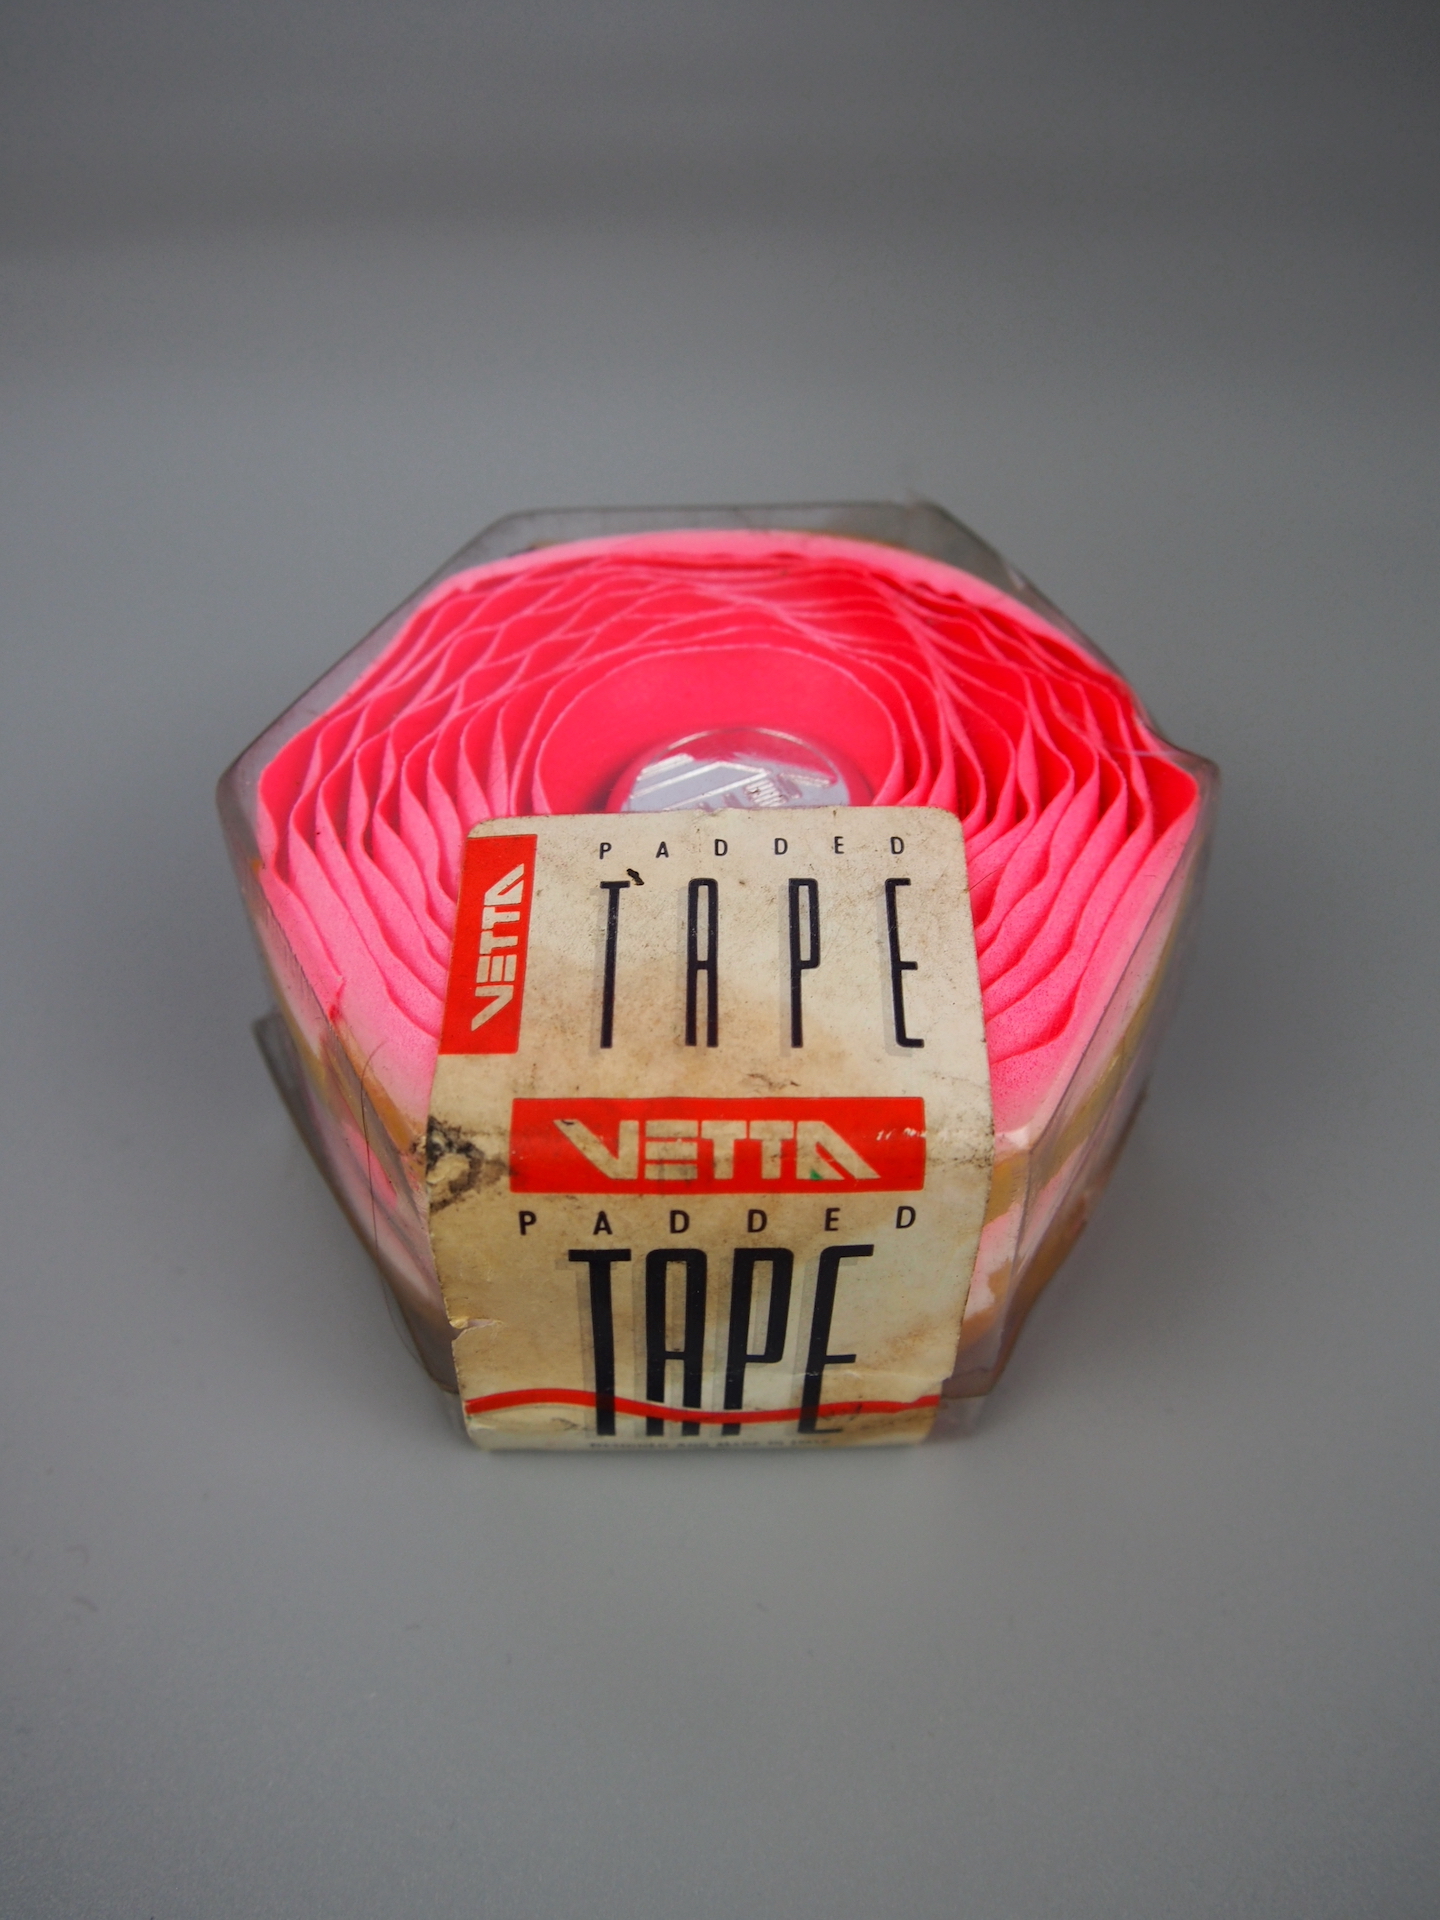 Vetta Padded Bar Tape – Neon Pink